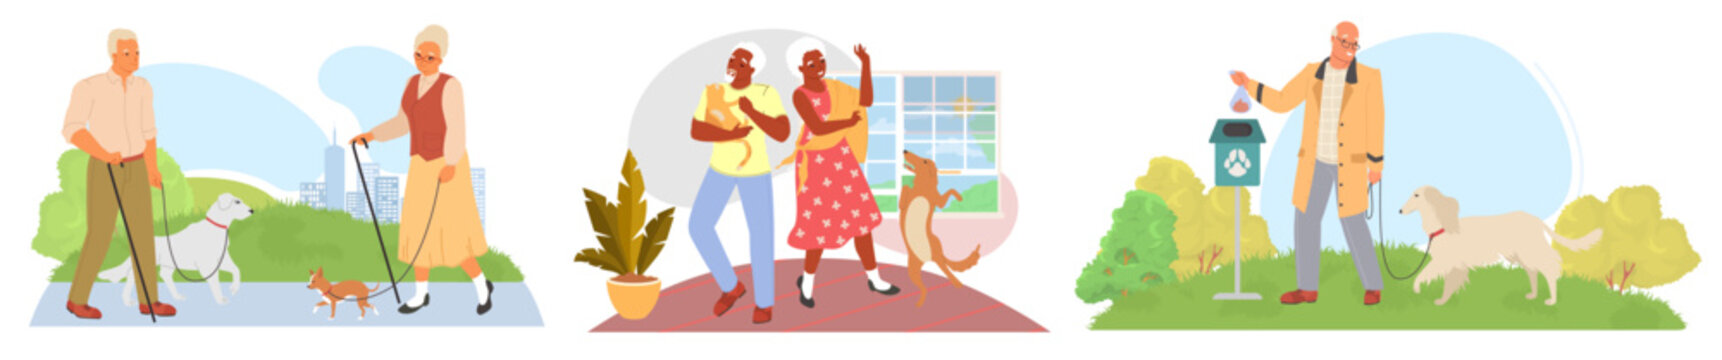 Happy elderly and pet animals activity vector illustration set